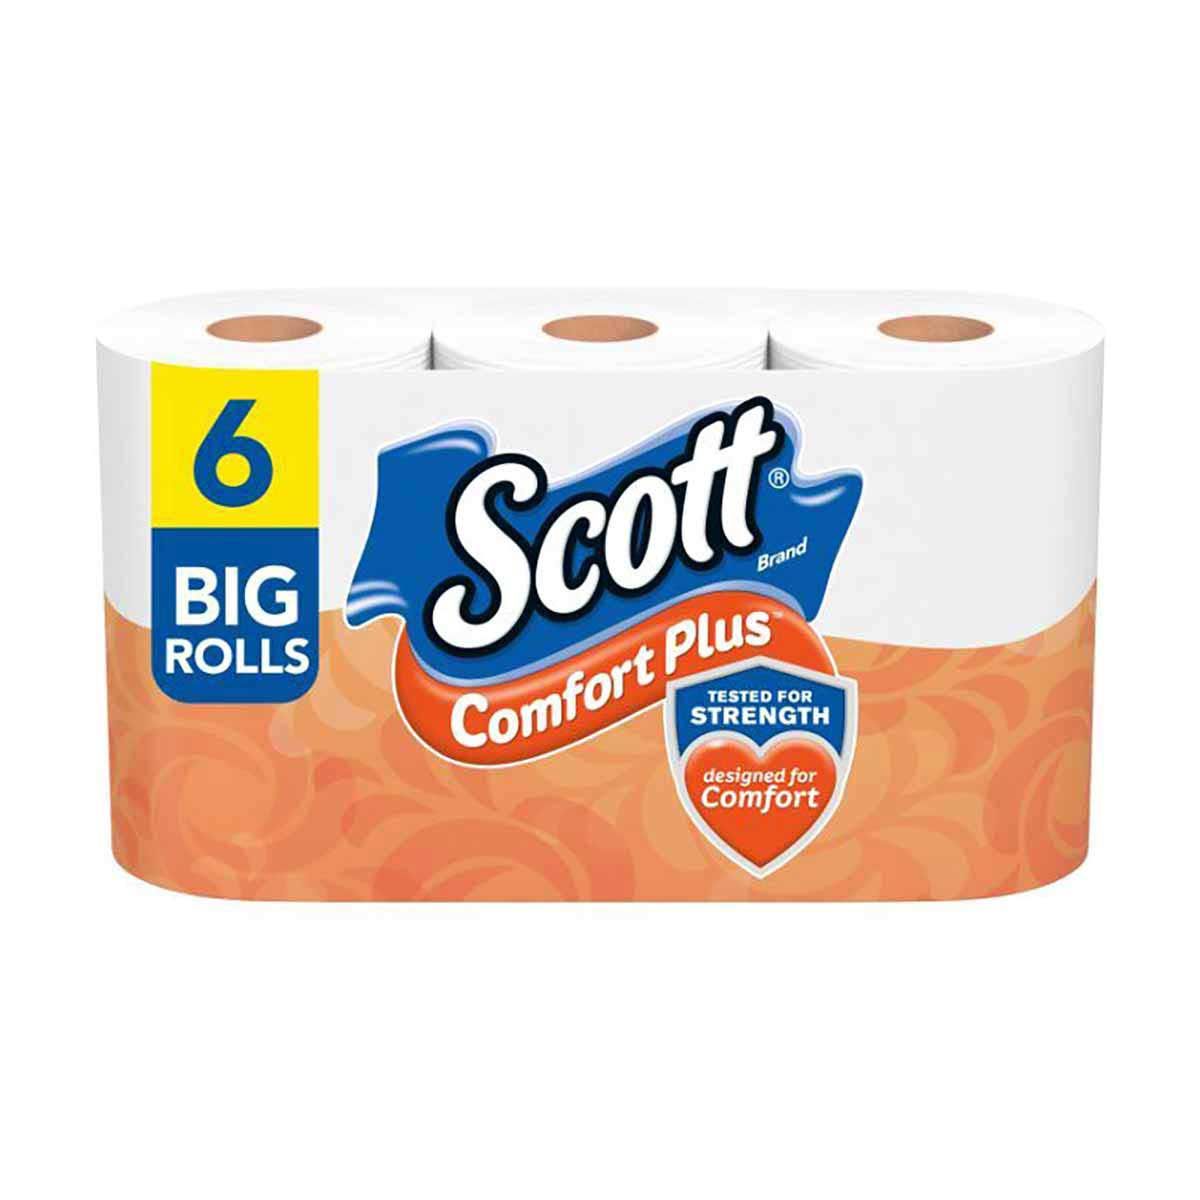 Scott ComfortPlus Toilet Paper, Big Roll, 6 Rolls, Bath Tissue